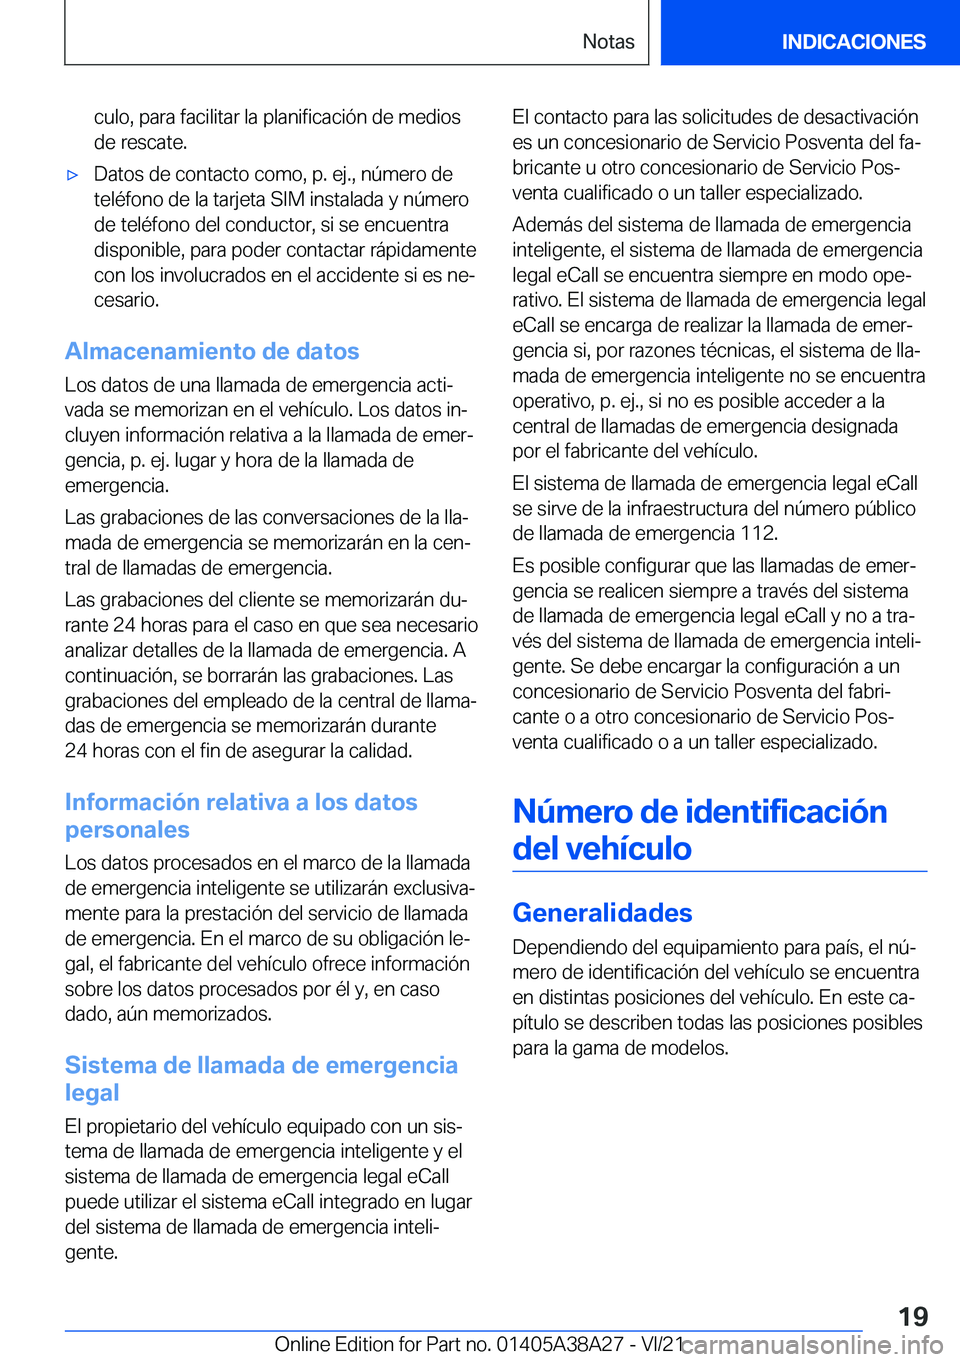 BMW 4 SERIES GRAN COUPE 2022  Manuales de Empleo (in Spanish) �c�u�l�o�,��p�a�r�a��f�a�c�i�l�i�t�a�r��l�a��p�l�a�n�i�f�i�c�a�c�i�